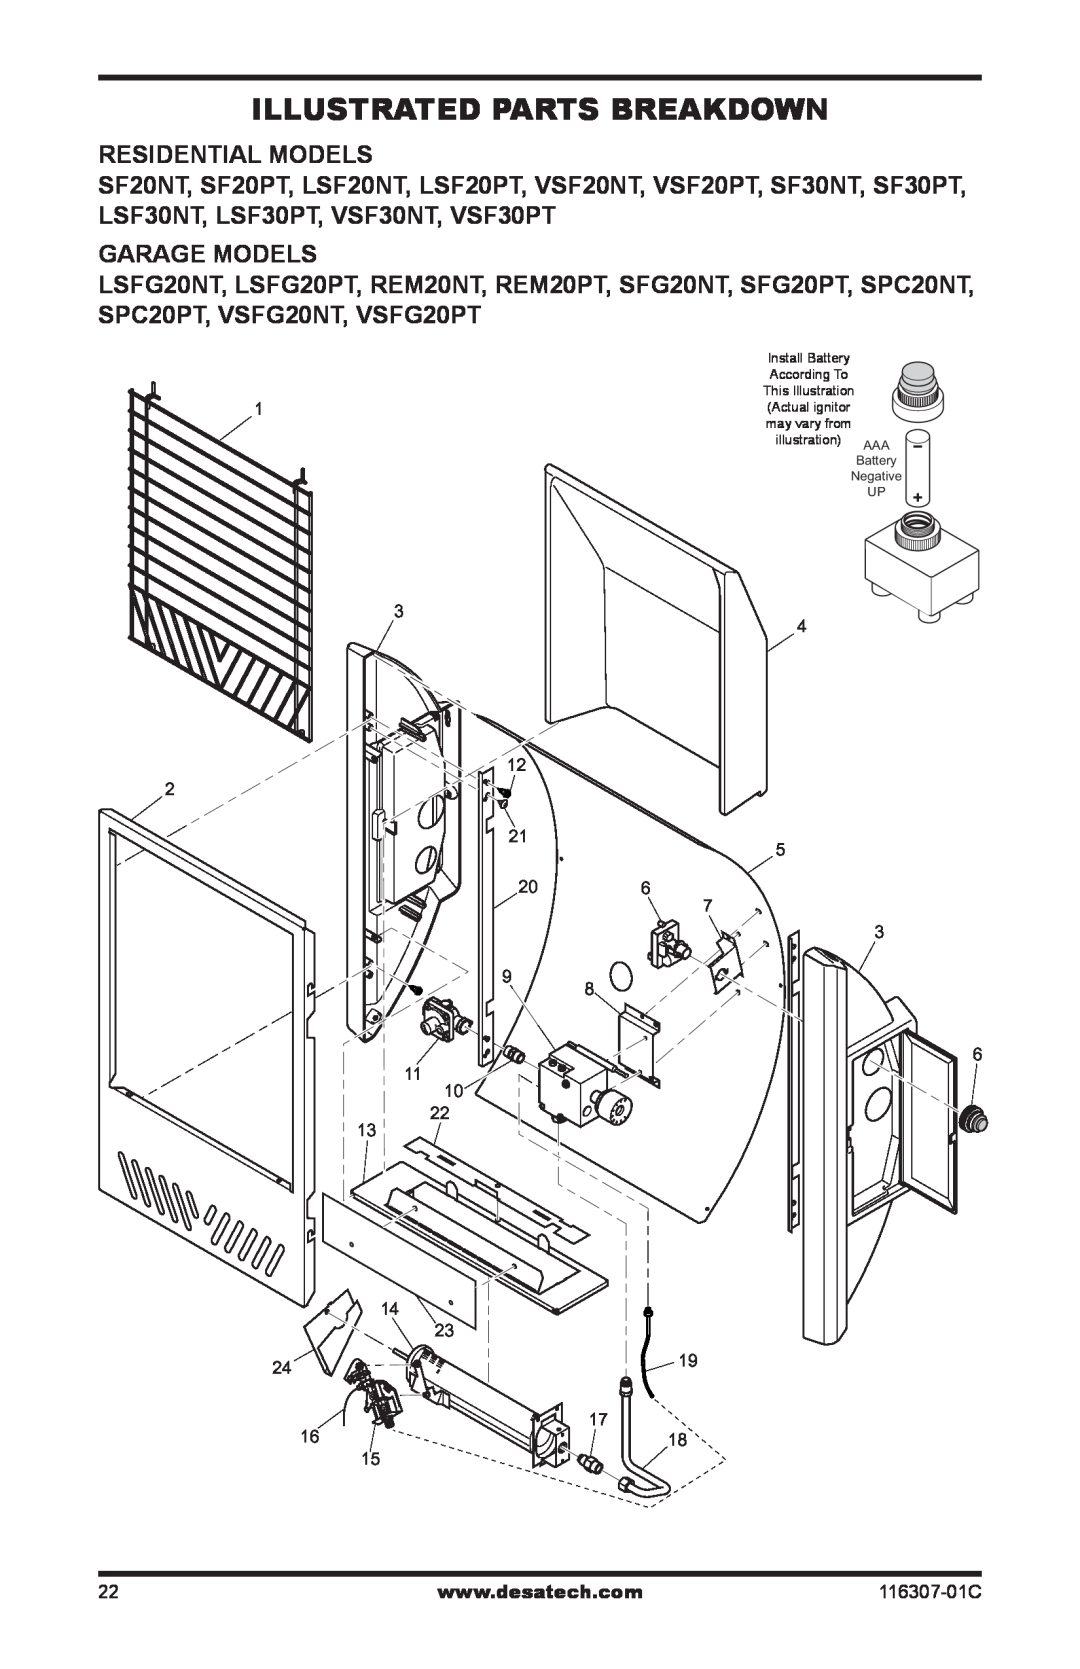 Desa LSFG20NT, VSF30PT installation manual Illustrated Parts Breakdown, Residential Models, Garage Models 